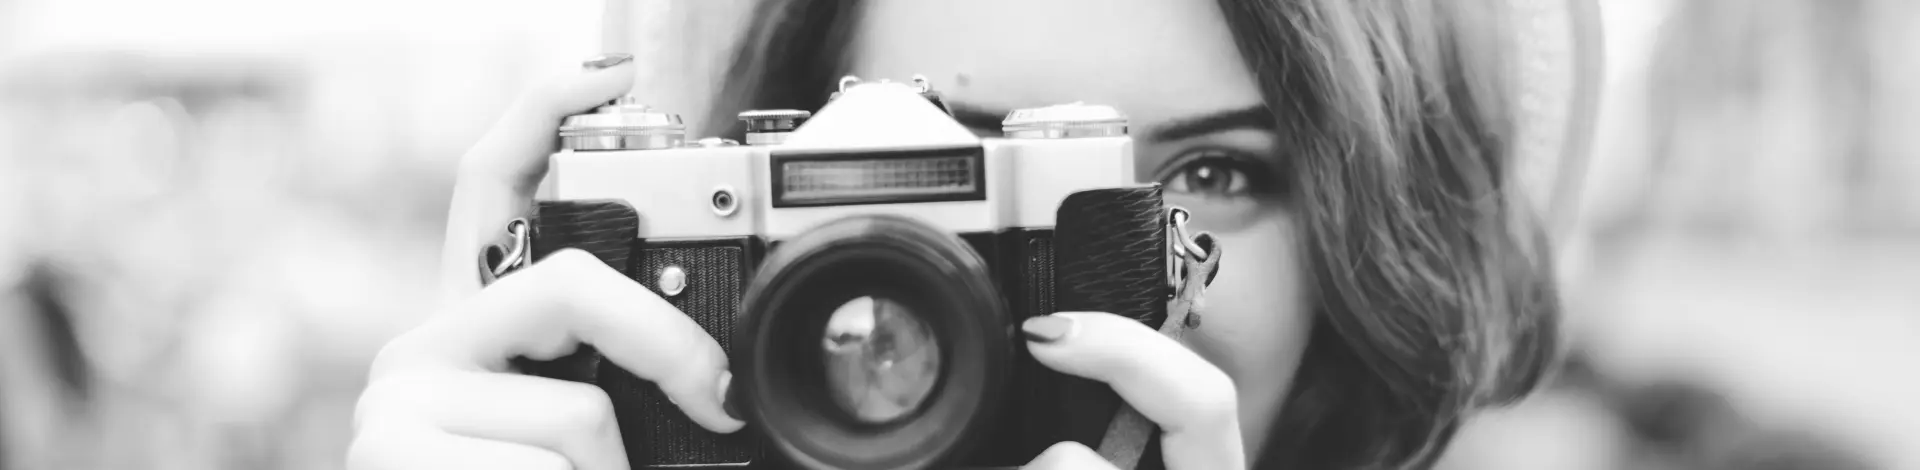 Junge Frau mit Fotokamera